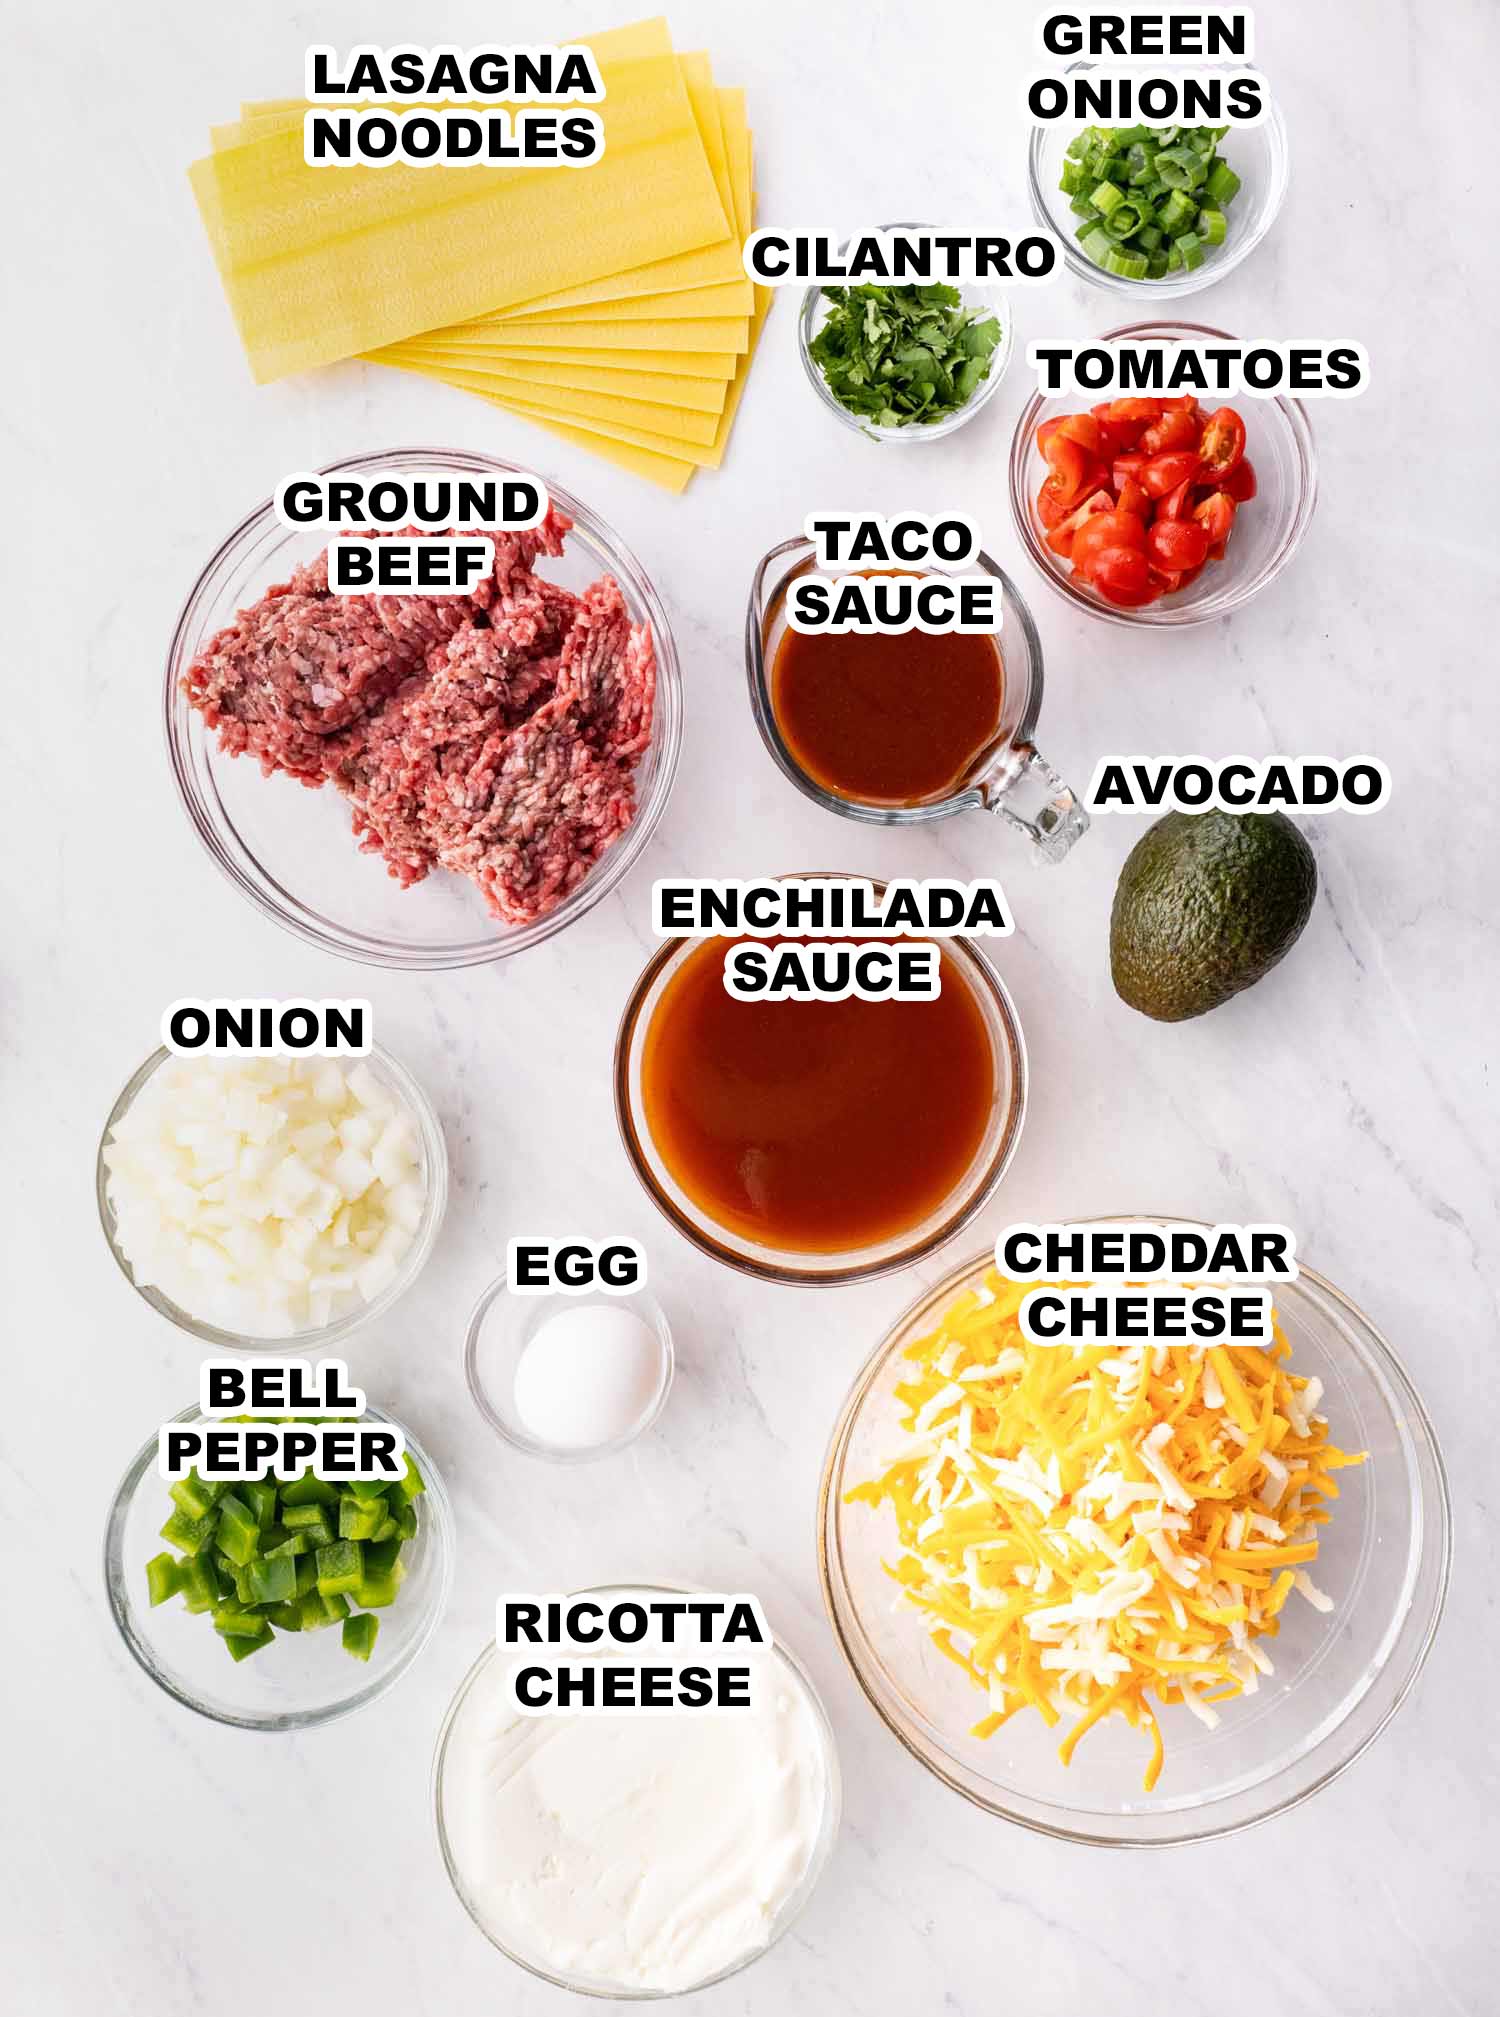 ingredients needed to make taco lasagna.